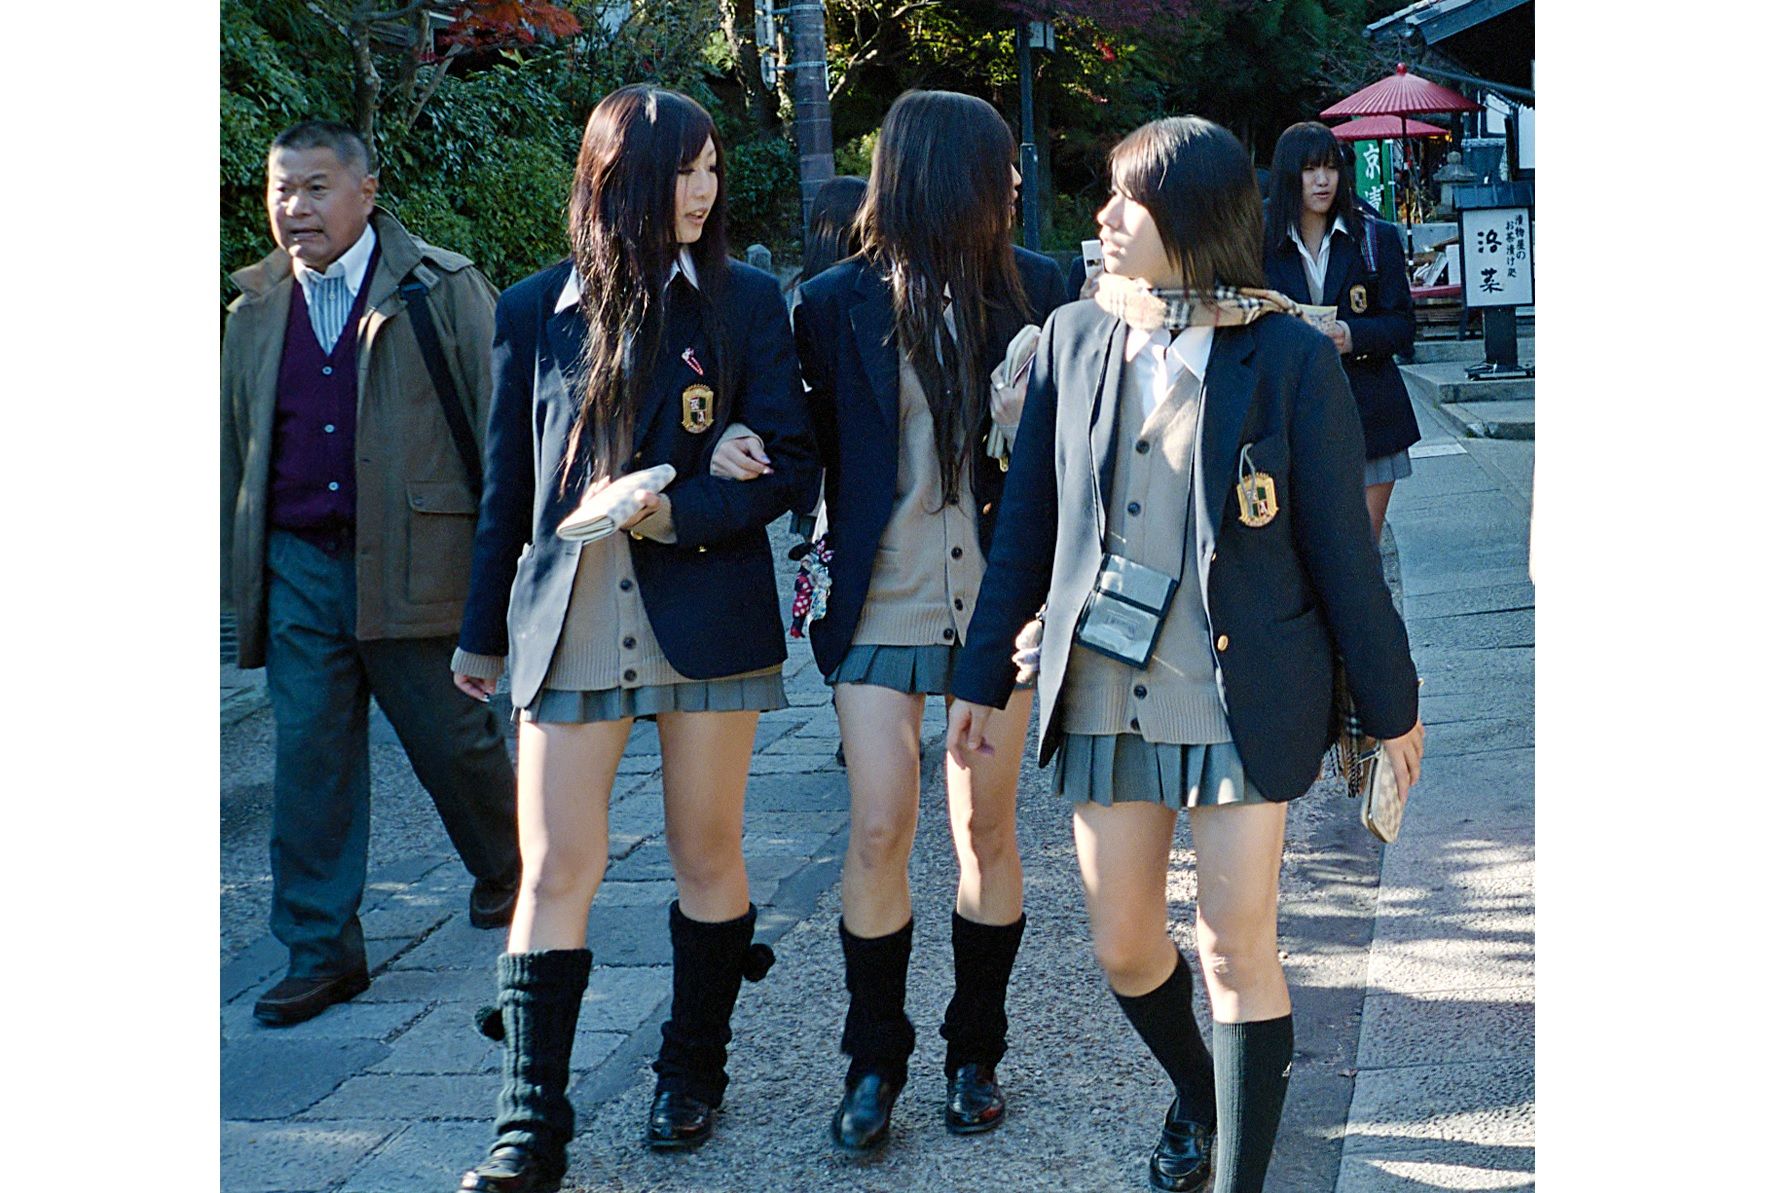 10 Fakta Mengejutkan Tentang Kehidupan Murid Sekolah Di Jepang Diantaranya Siswa Dilarang Keras 